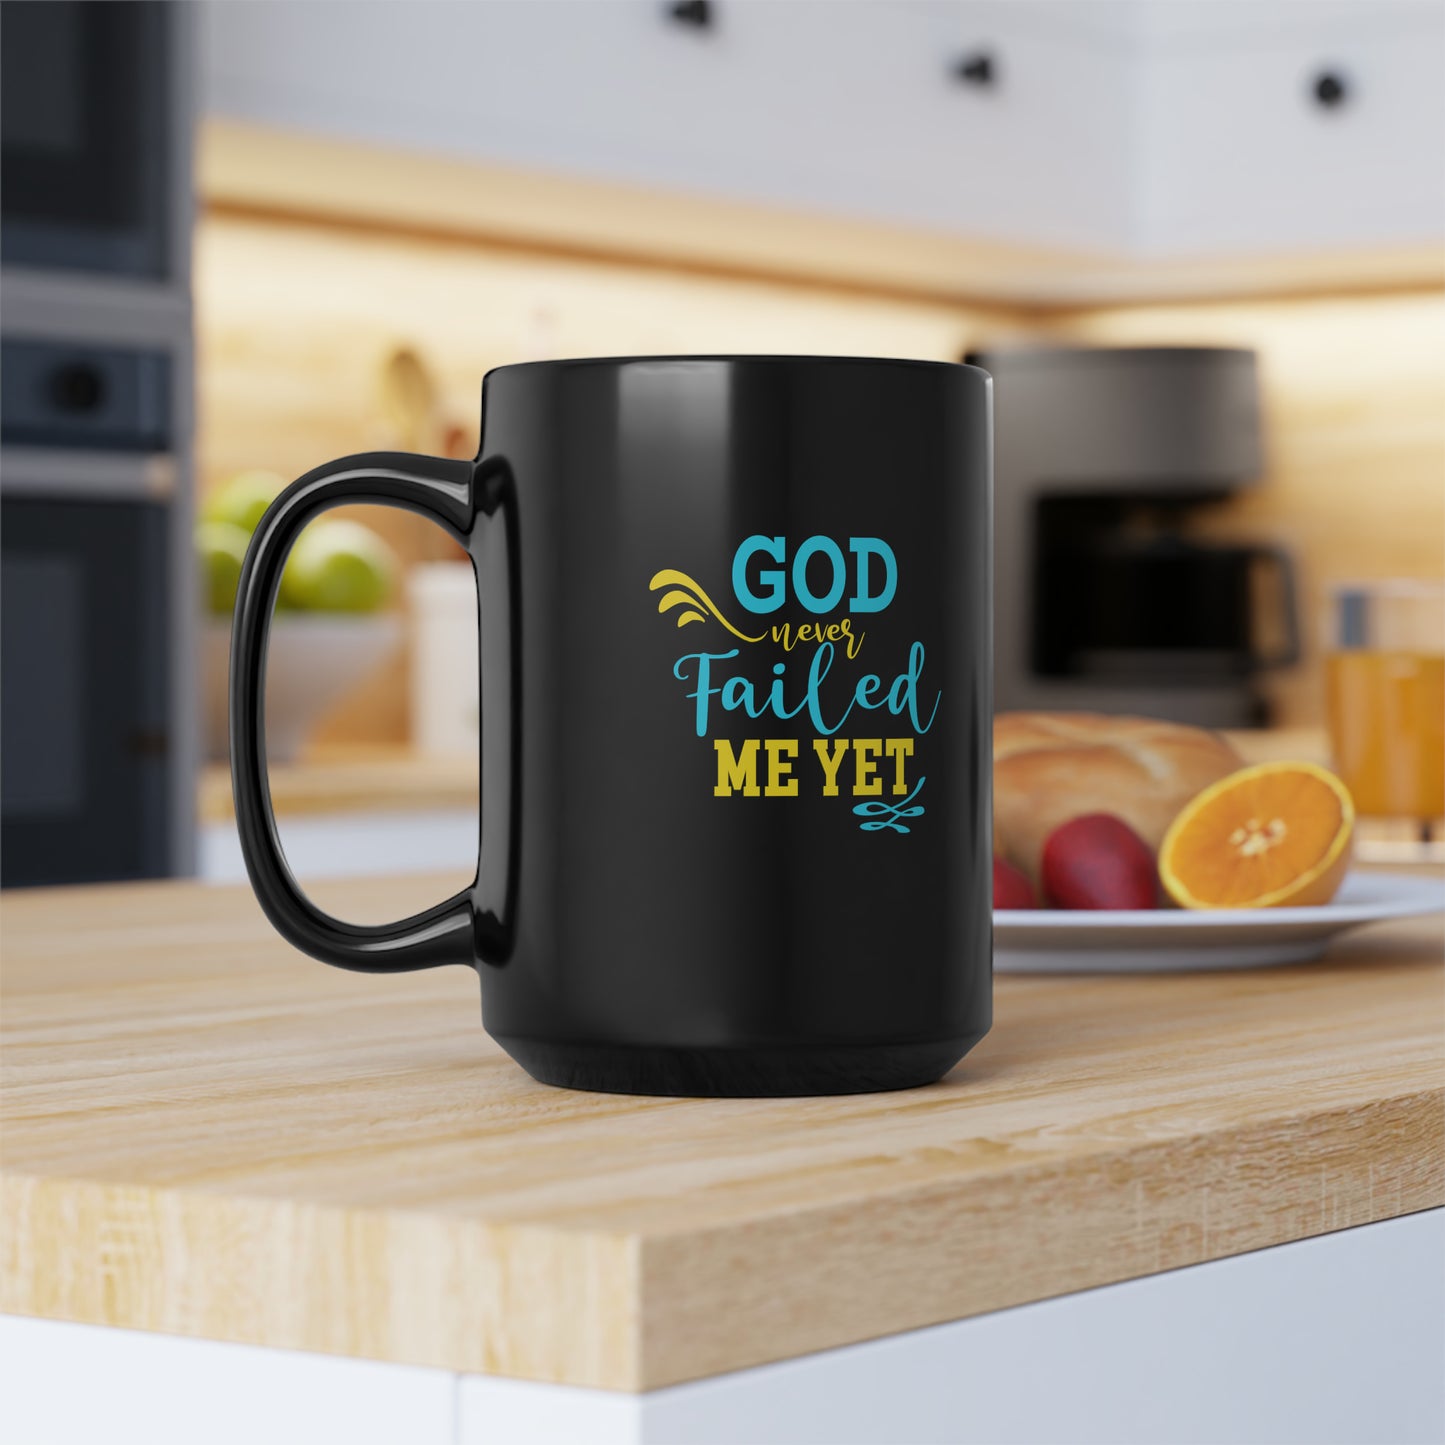 God Never Failed Me Yet Christian Black Ceramic Mug, 15oz (double sided print)